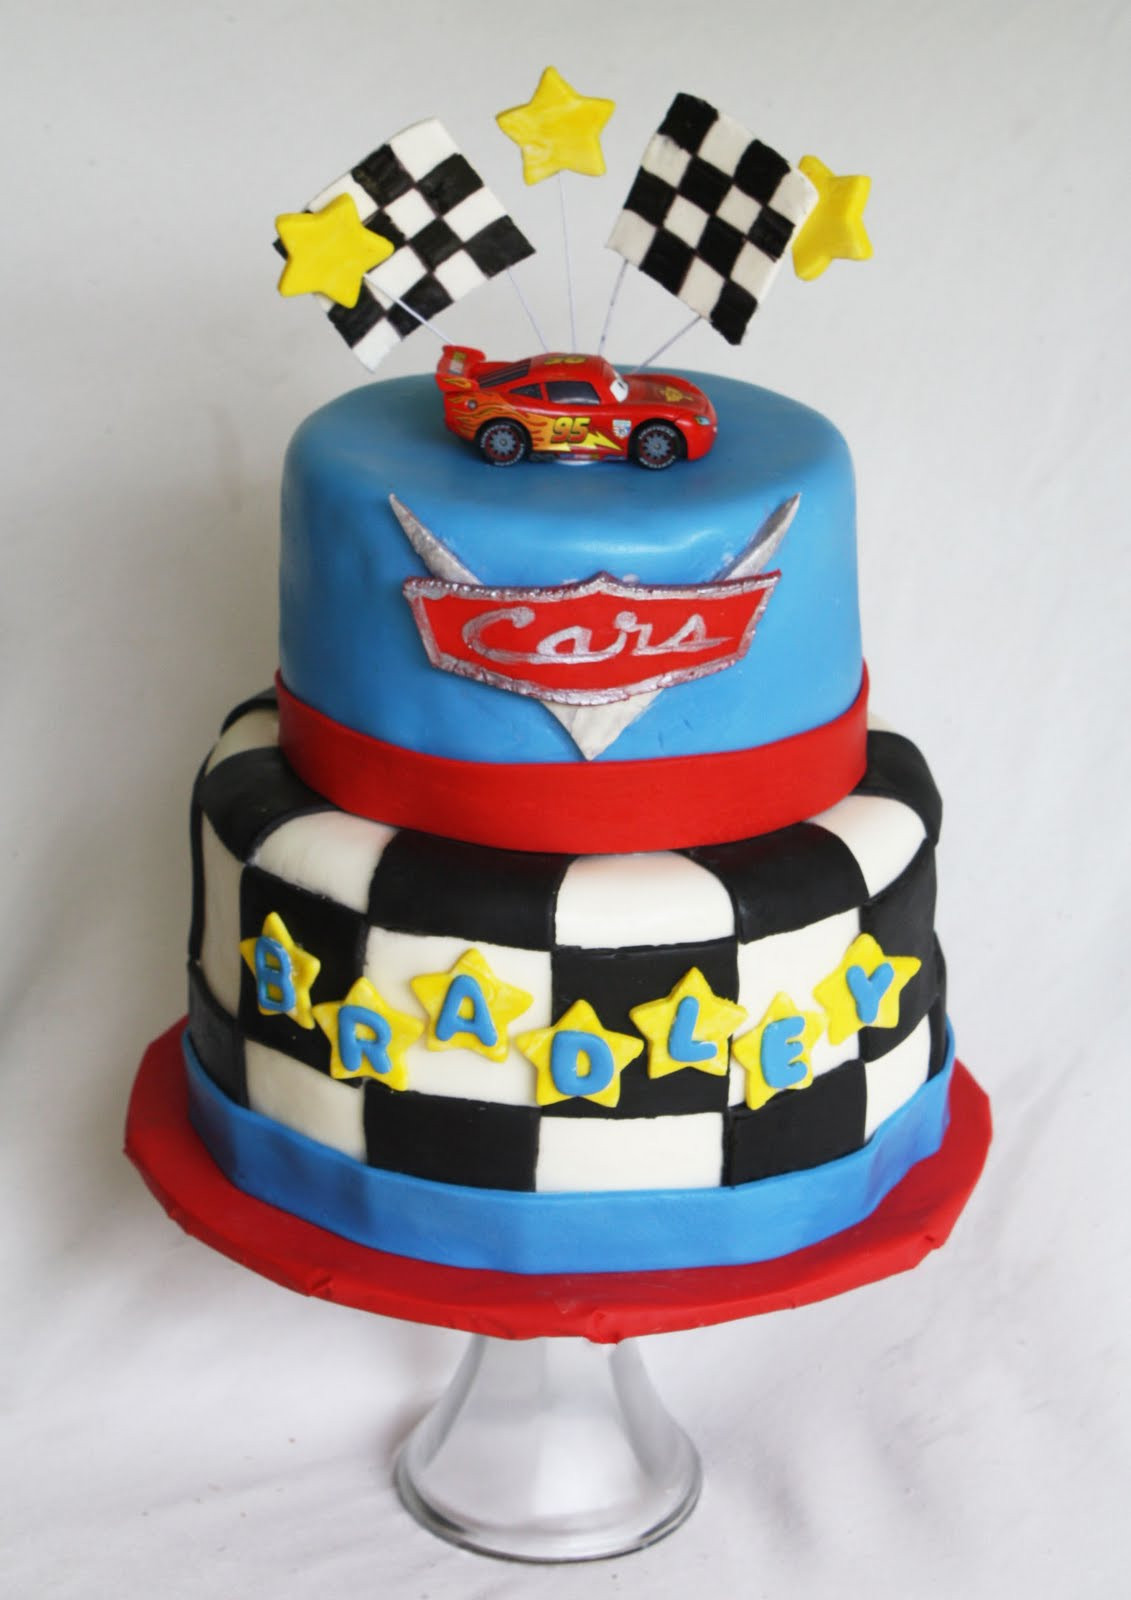 Disney Cars Birthday Cake
 A Disney Cars Cake